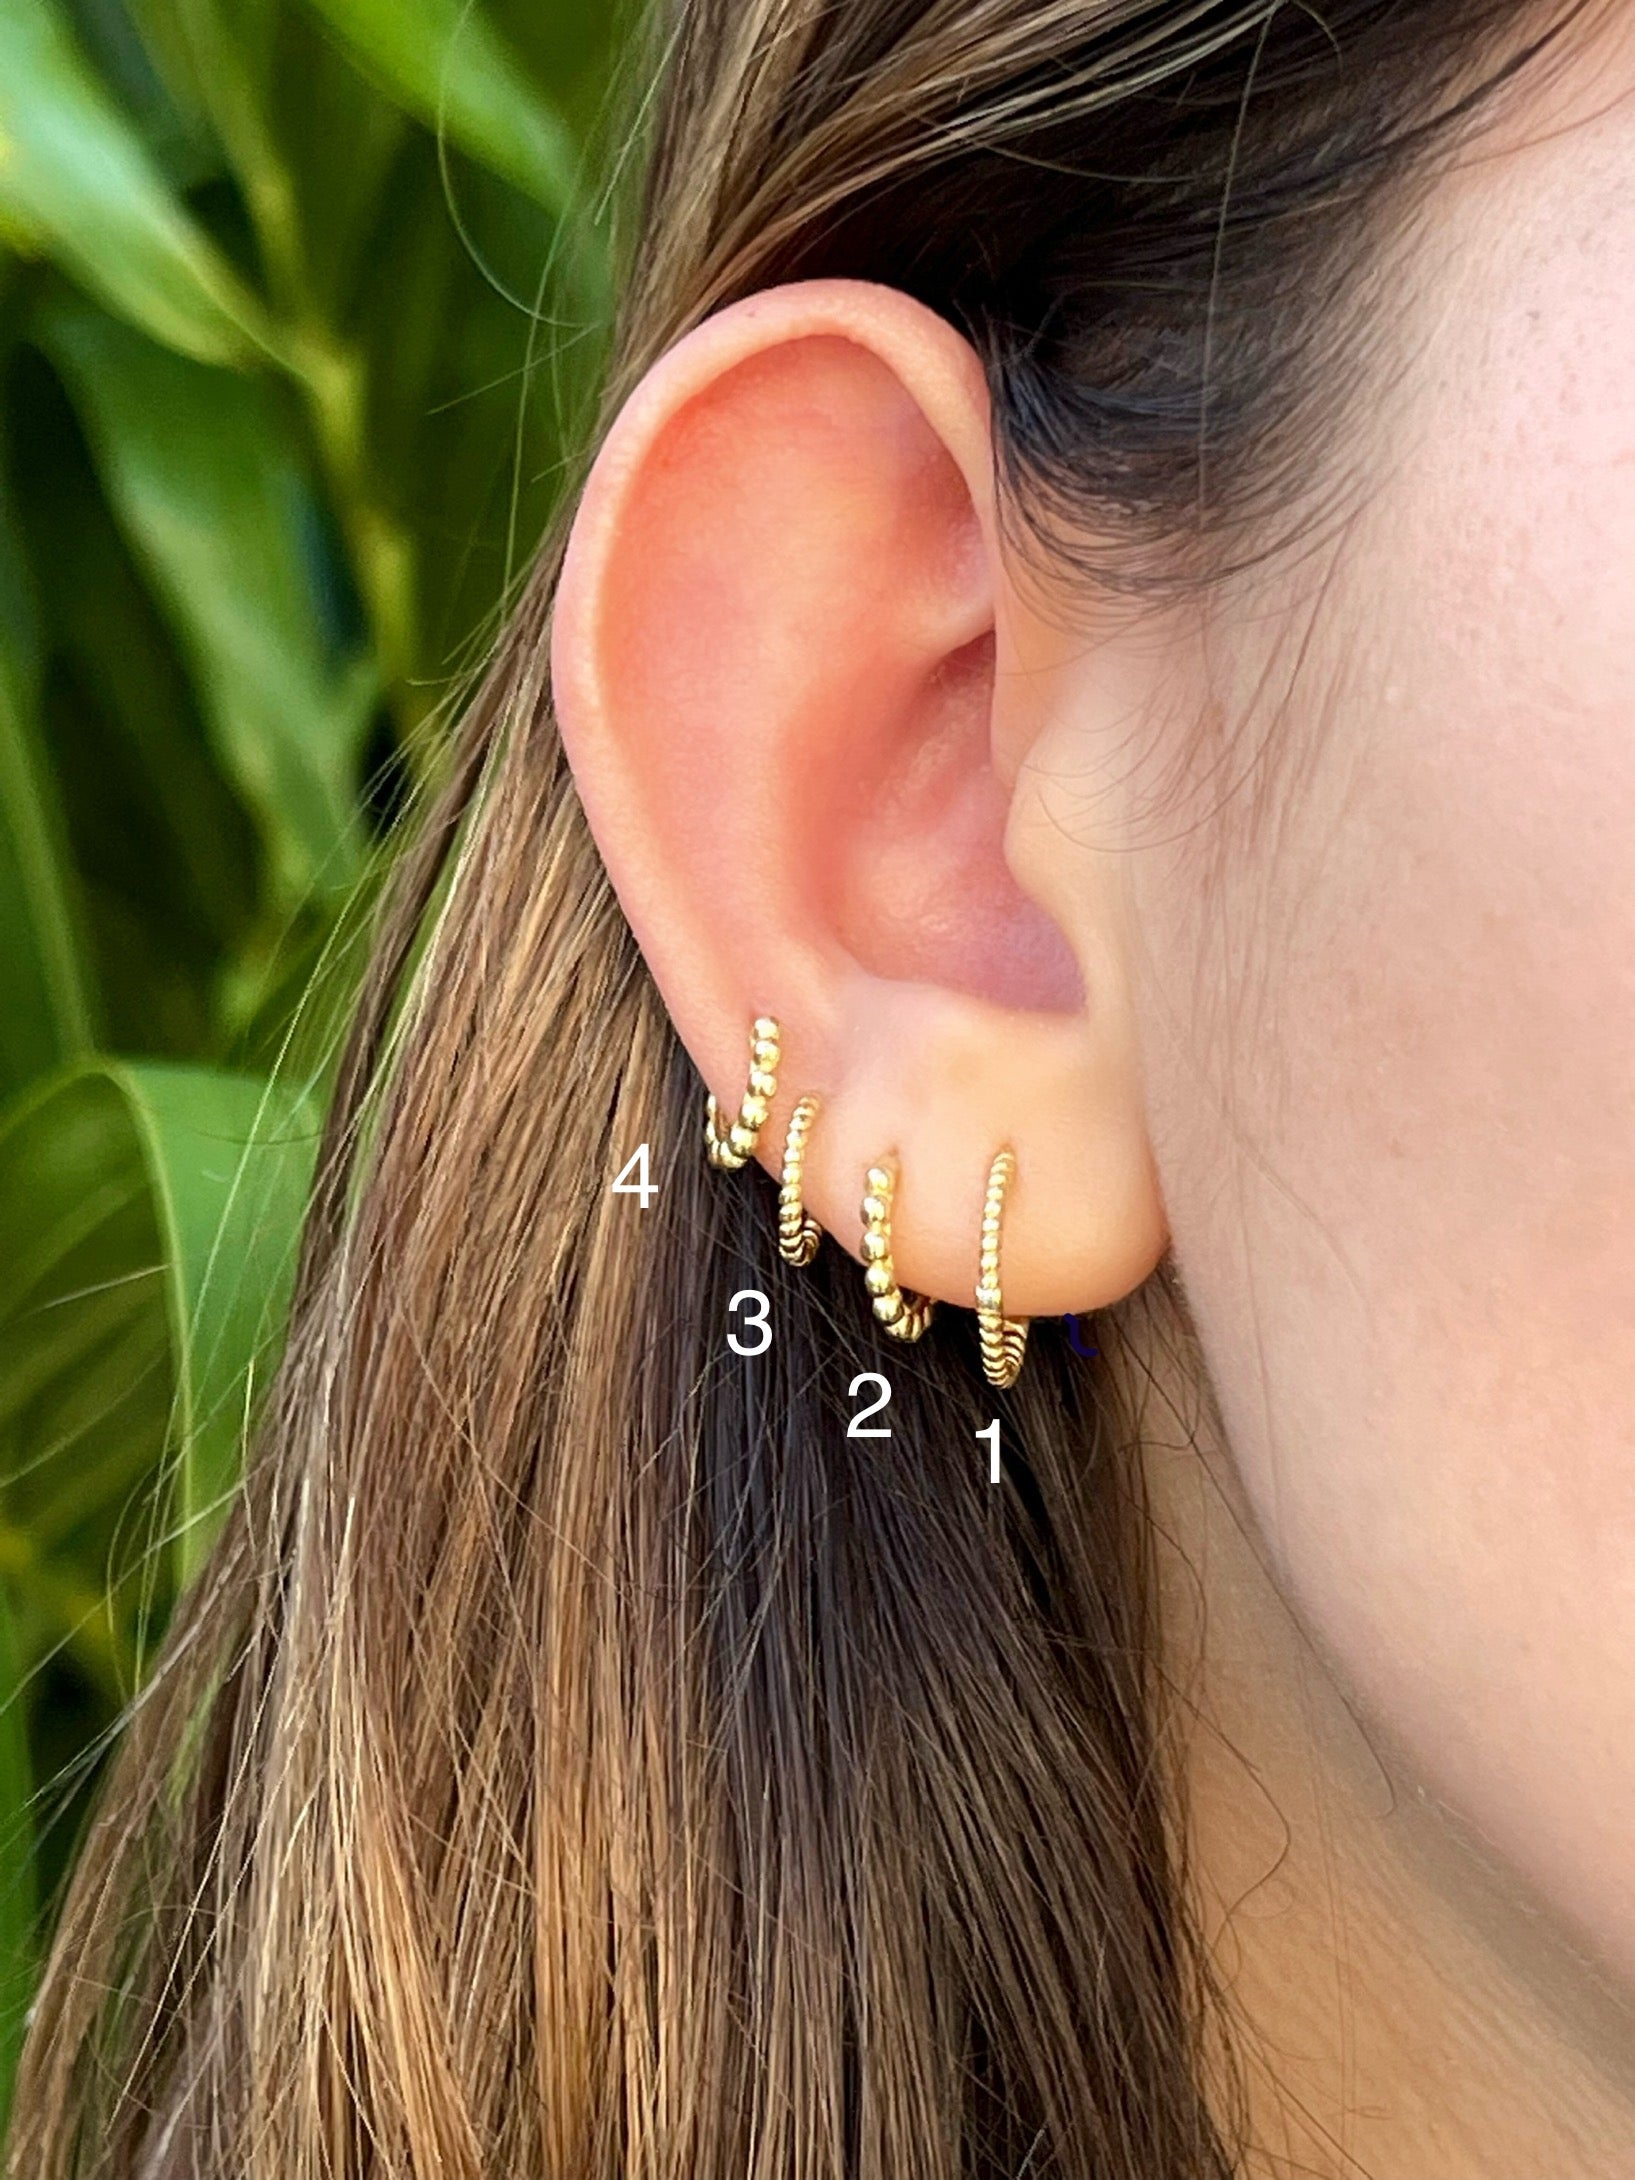 Mini Huggies earrings